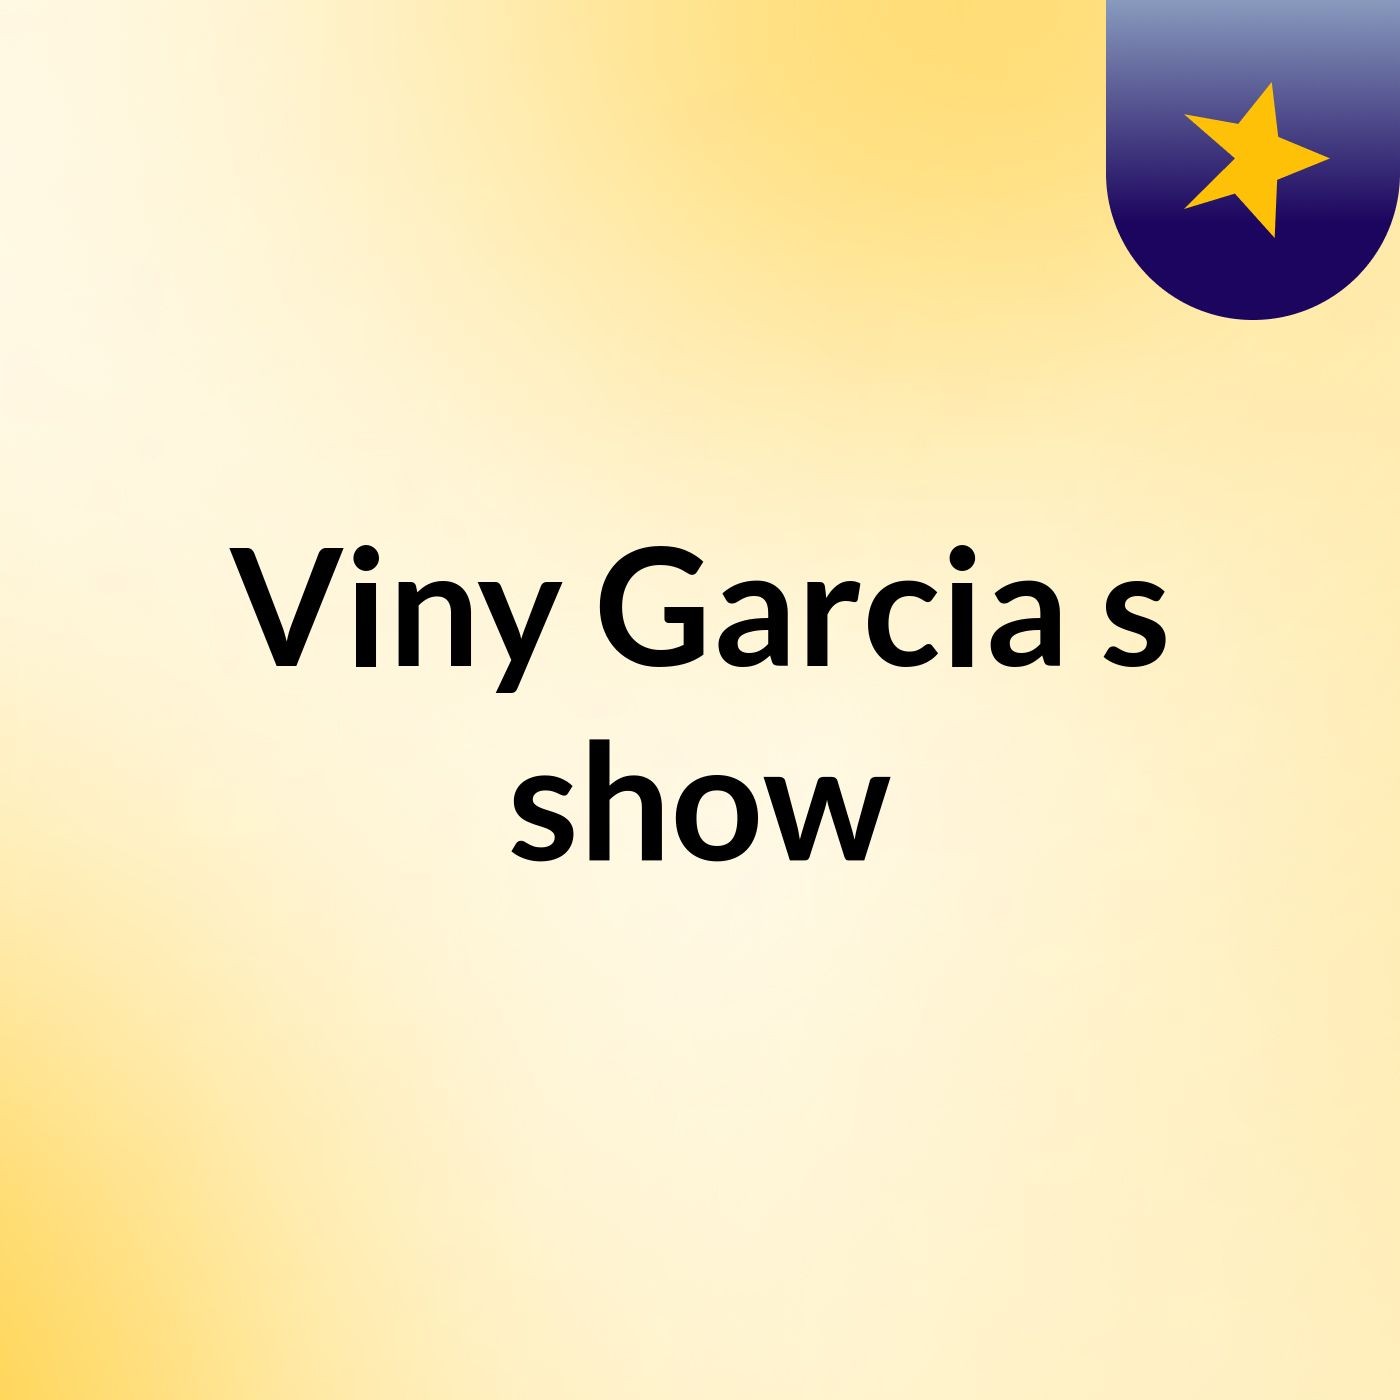 Viny Garcia's show